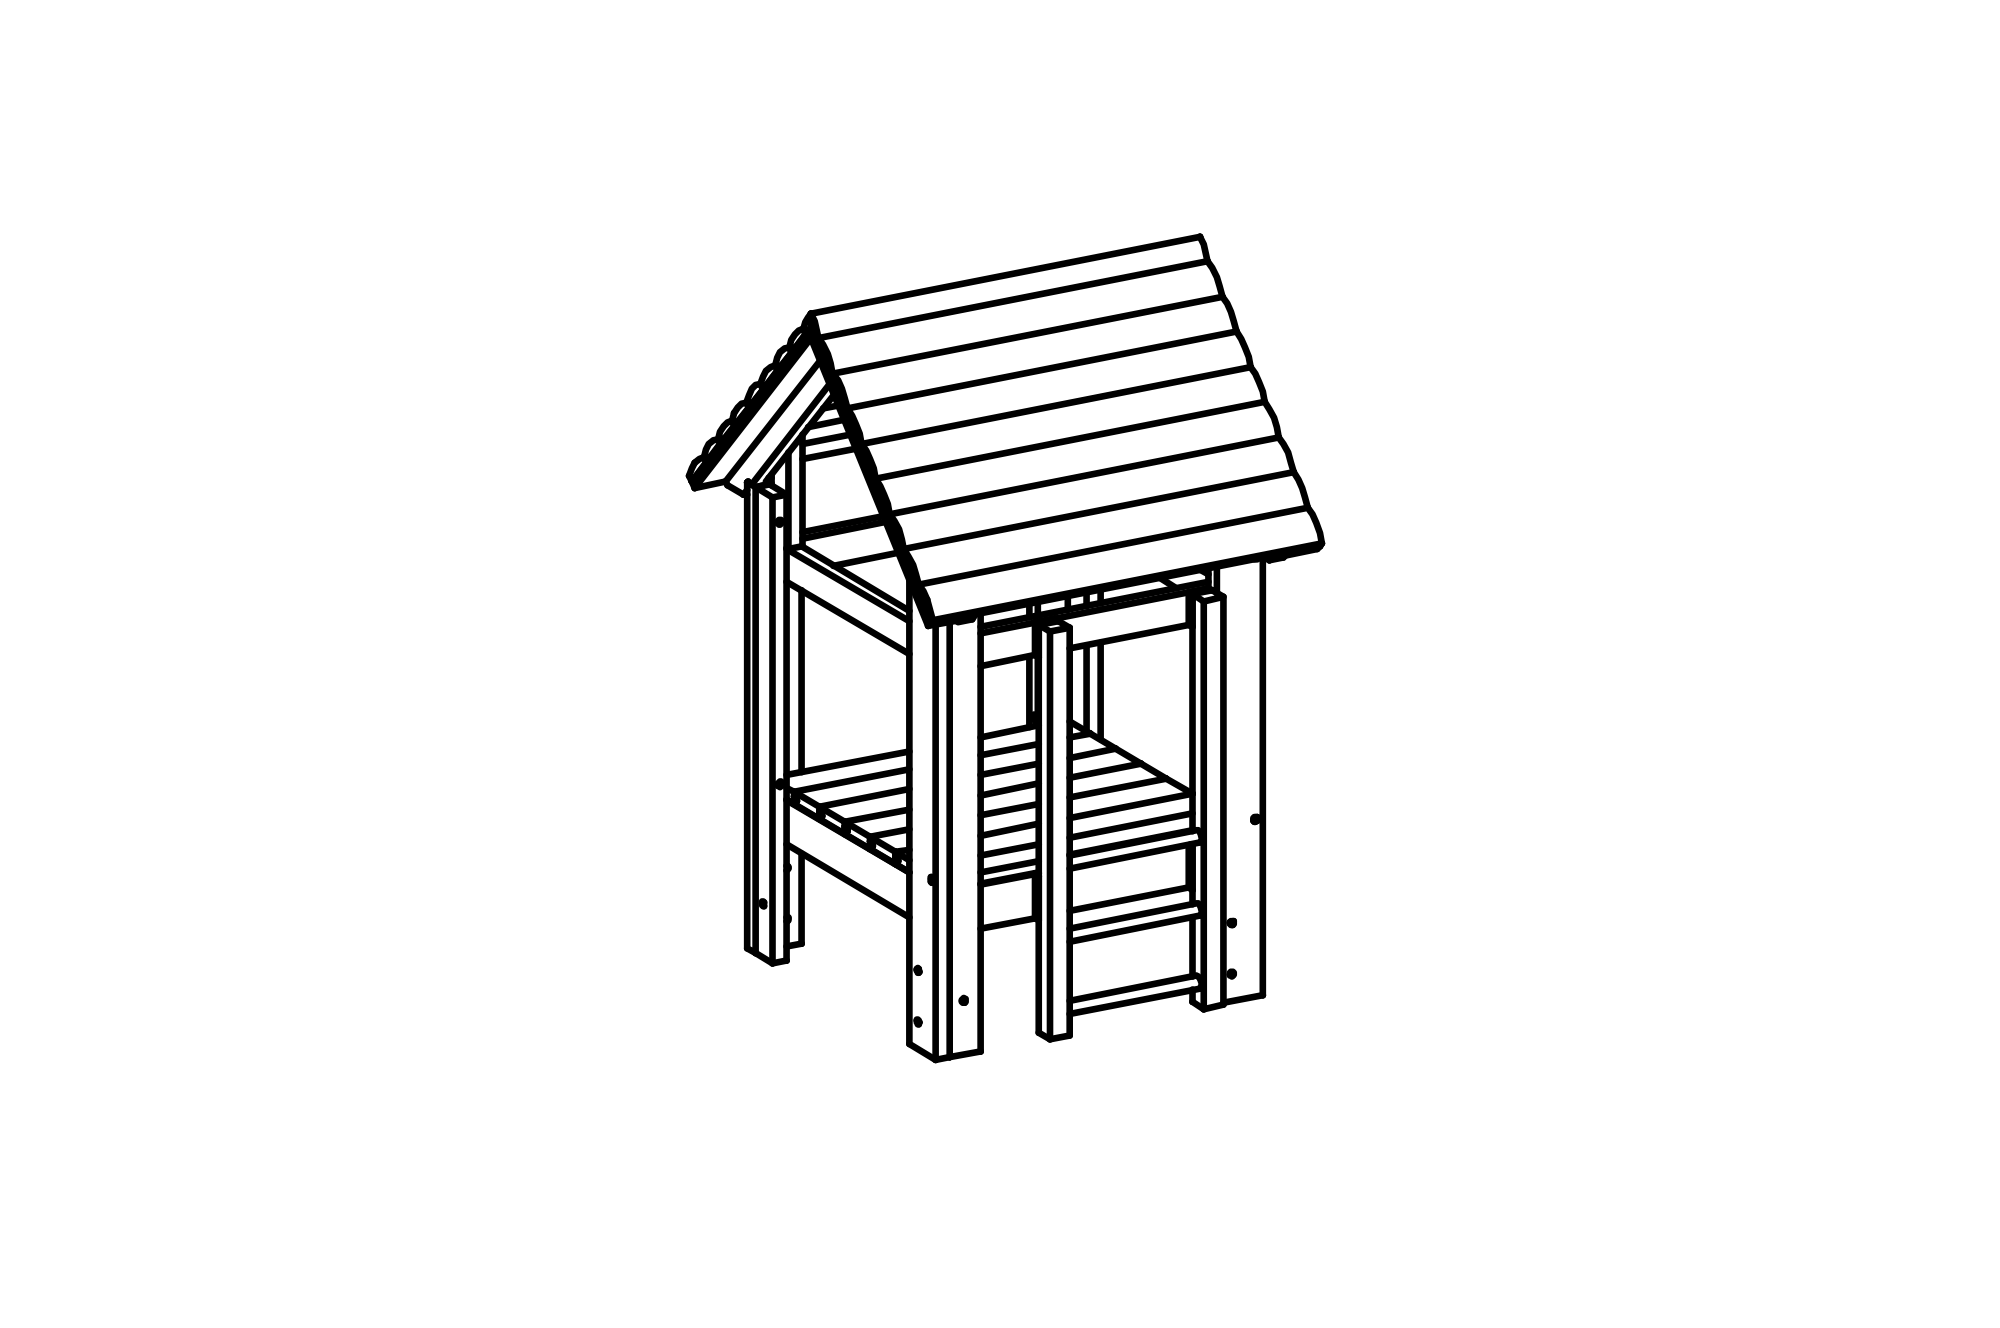 Toddler’s Platform Hut with roof